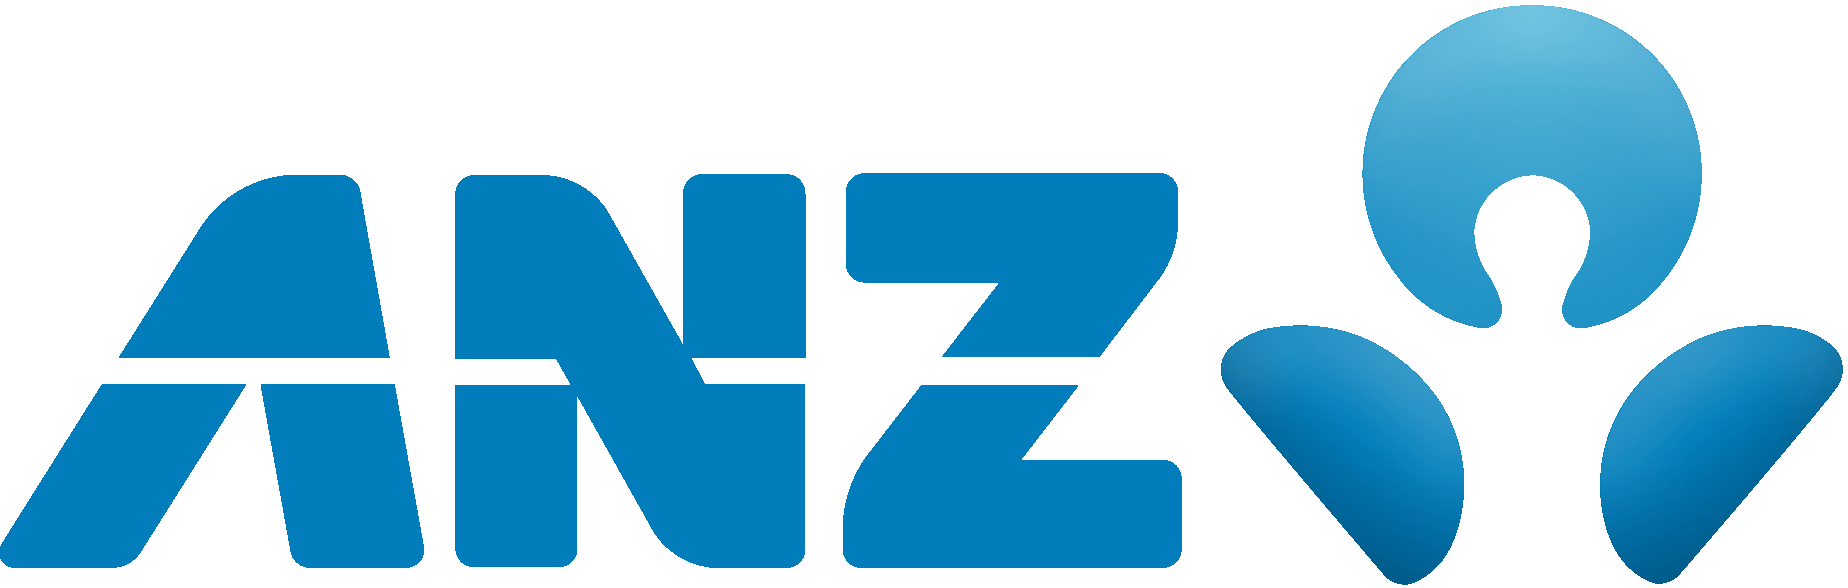 ANZ Banking Logo